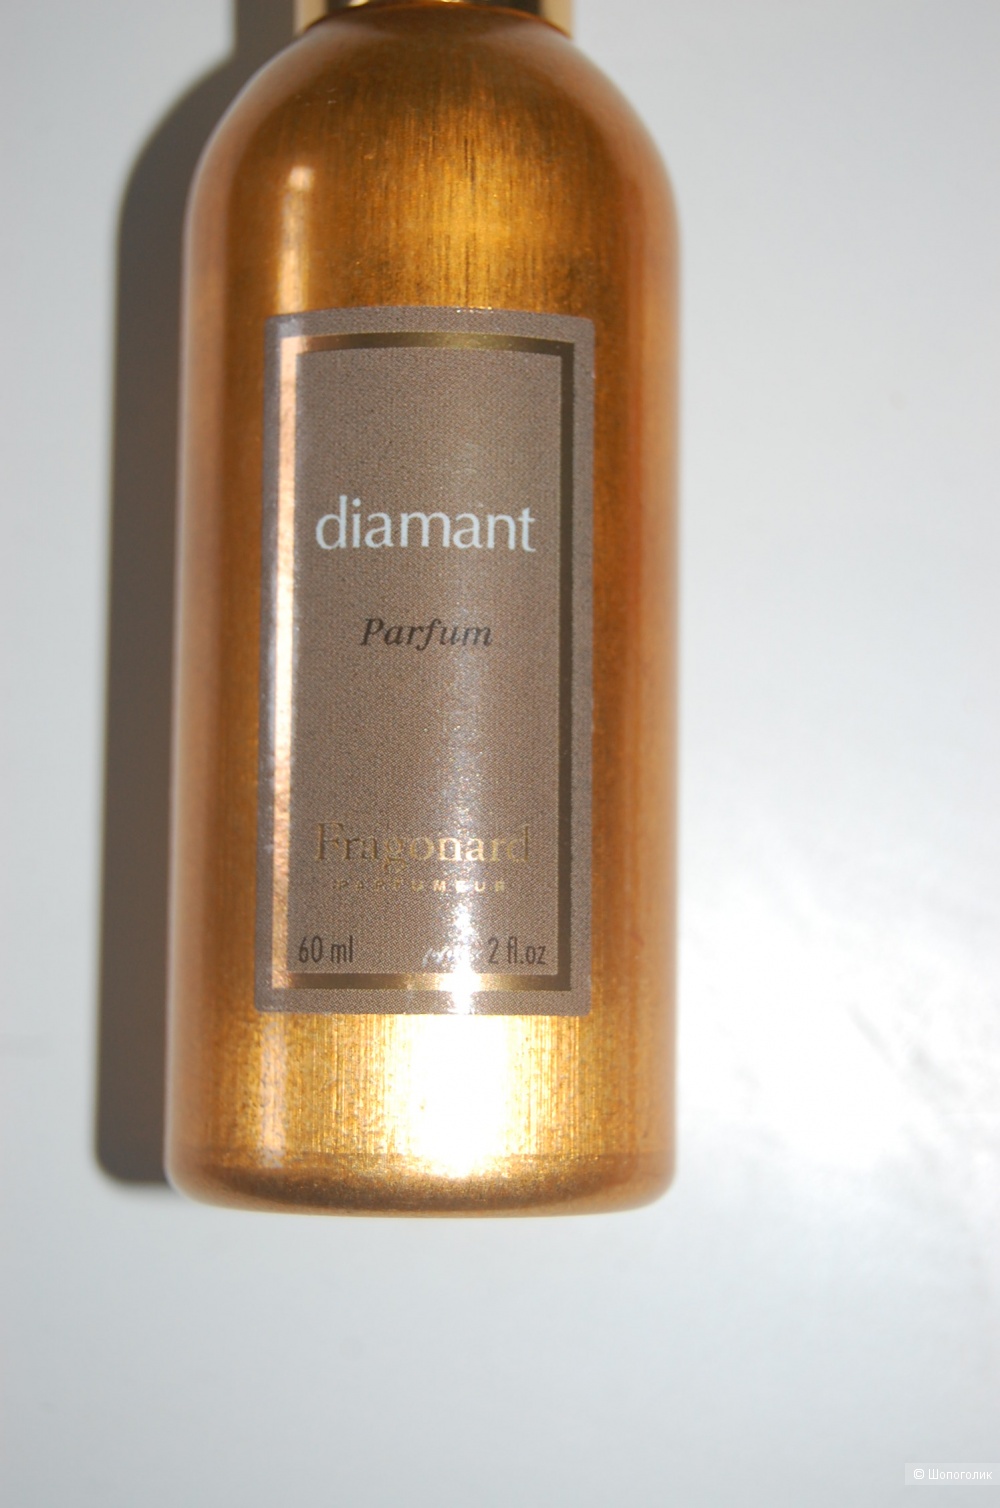 Fragonard Diamand Paffum 60ml